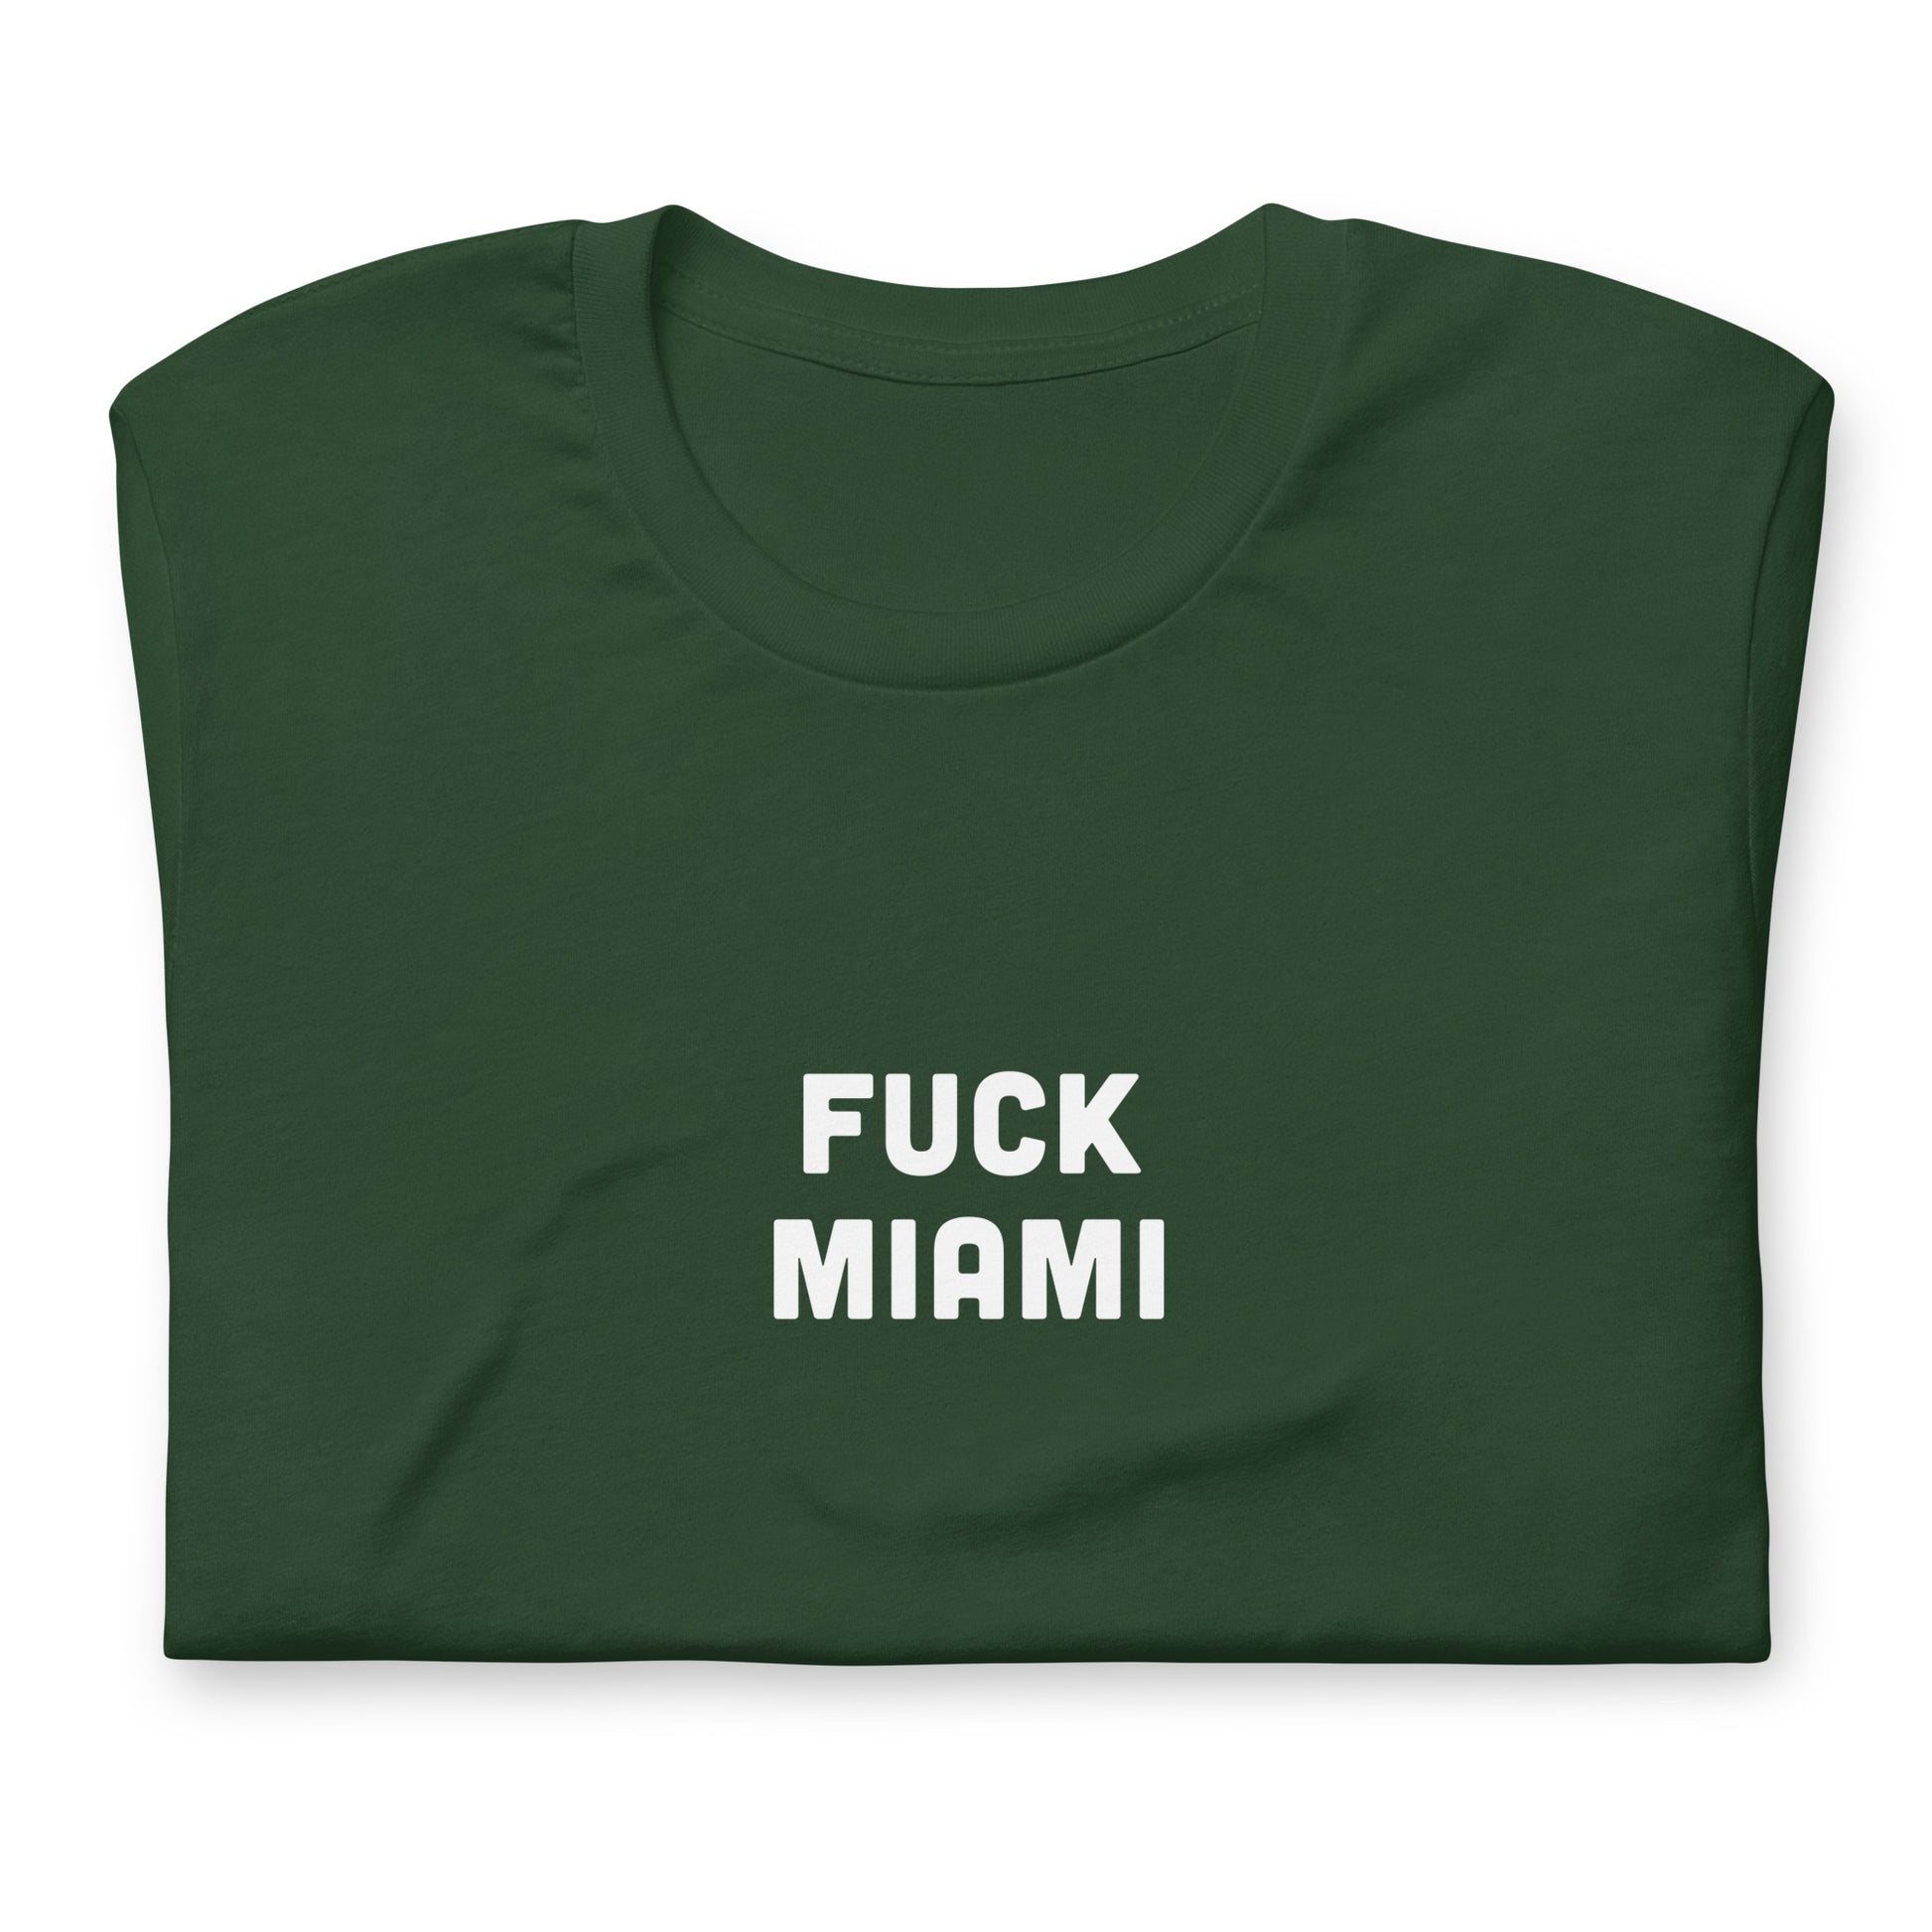 Fuck Miami T-Shirt Size M Color Navy